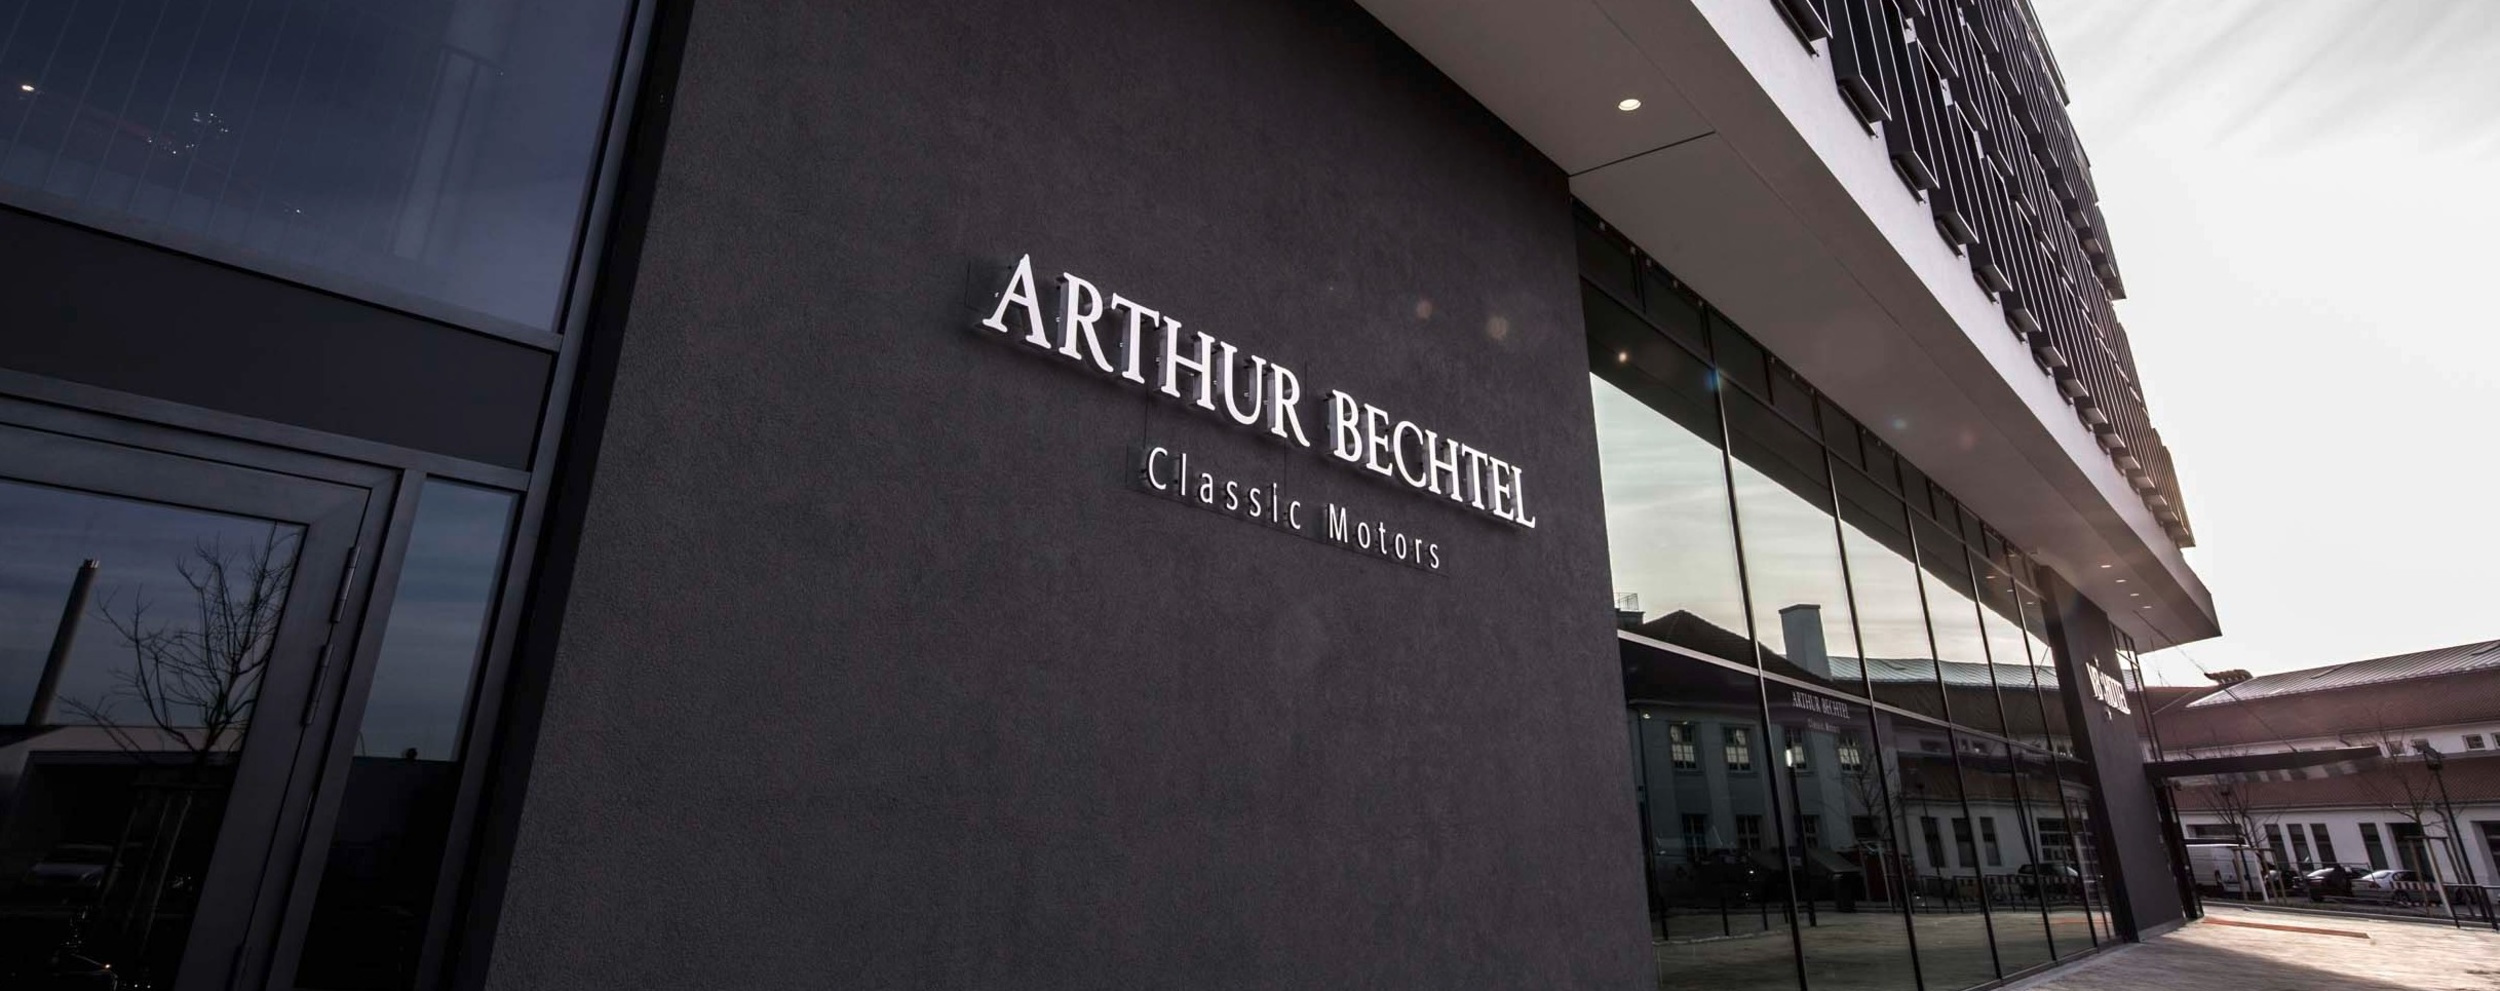 Arthur Bechtel Classic Motors Headquarter in der MOTORWORLD Region Stuttgart